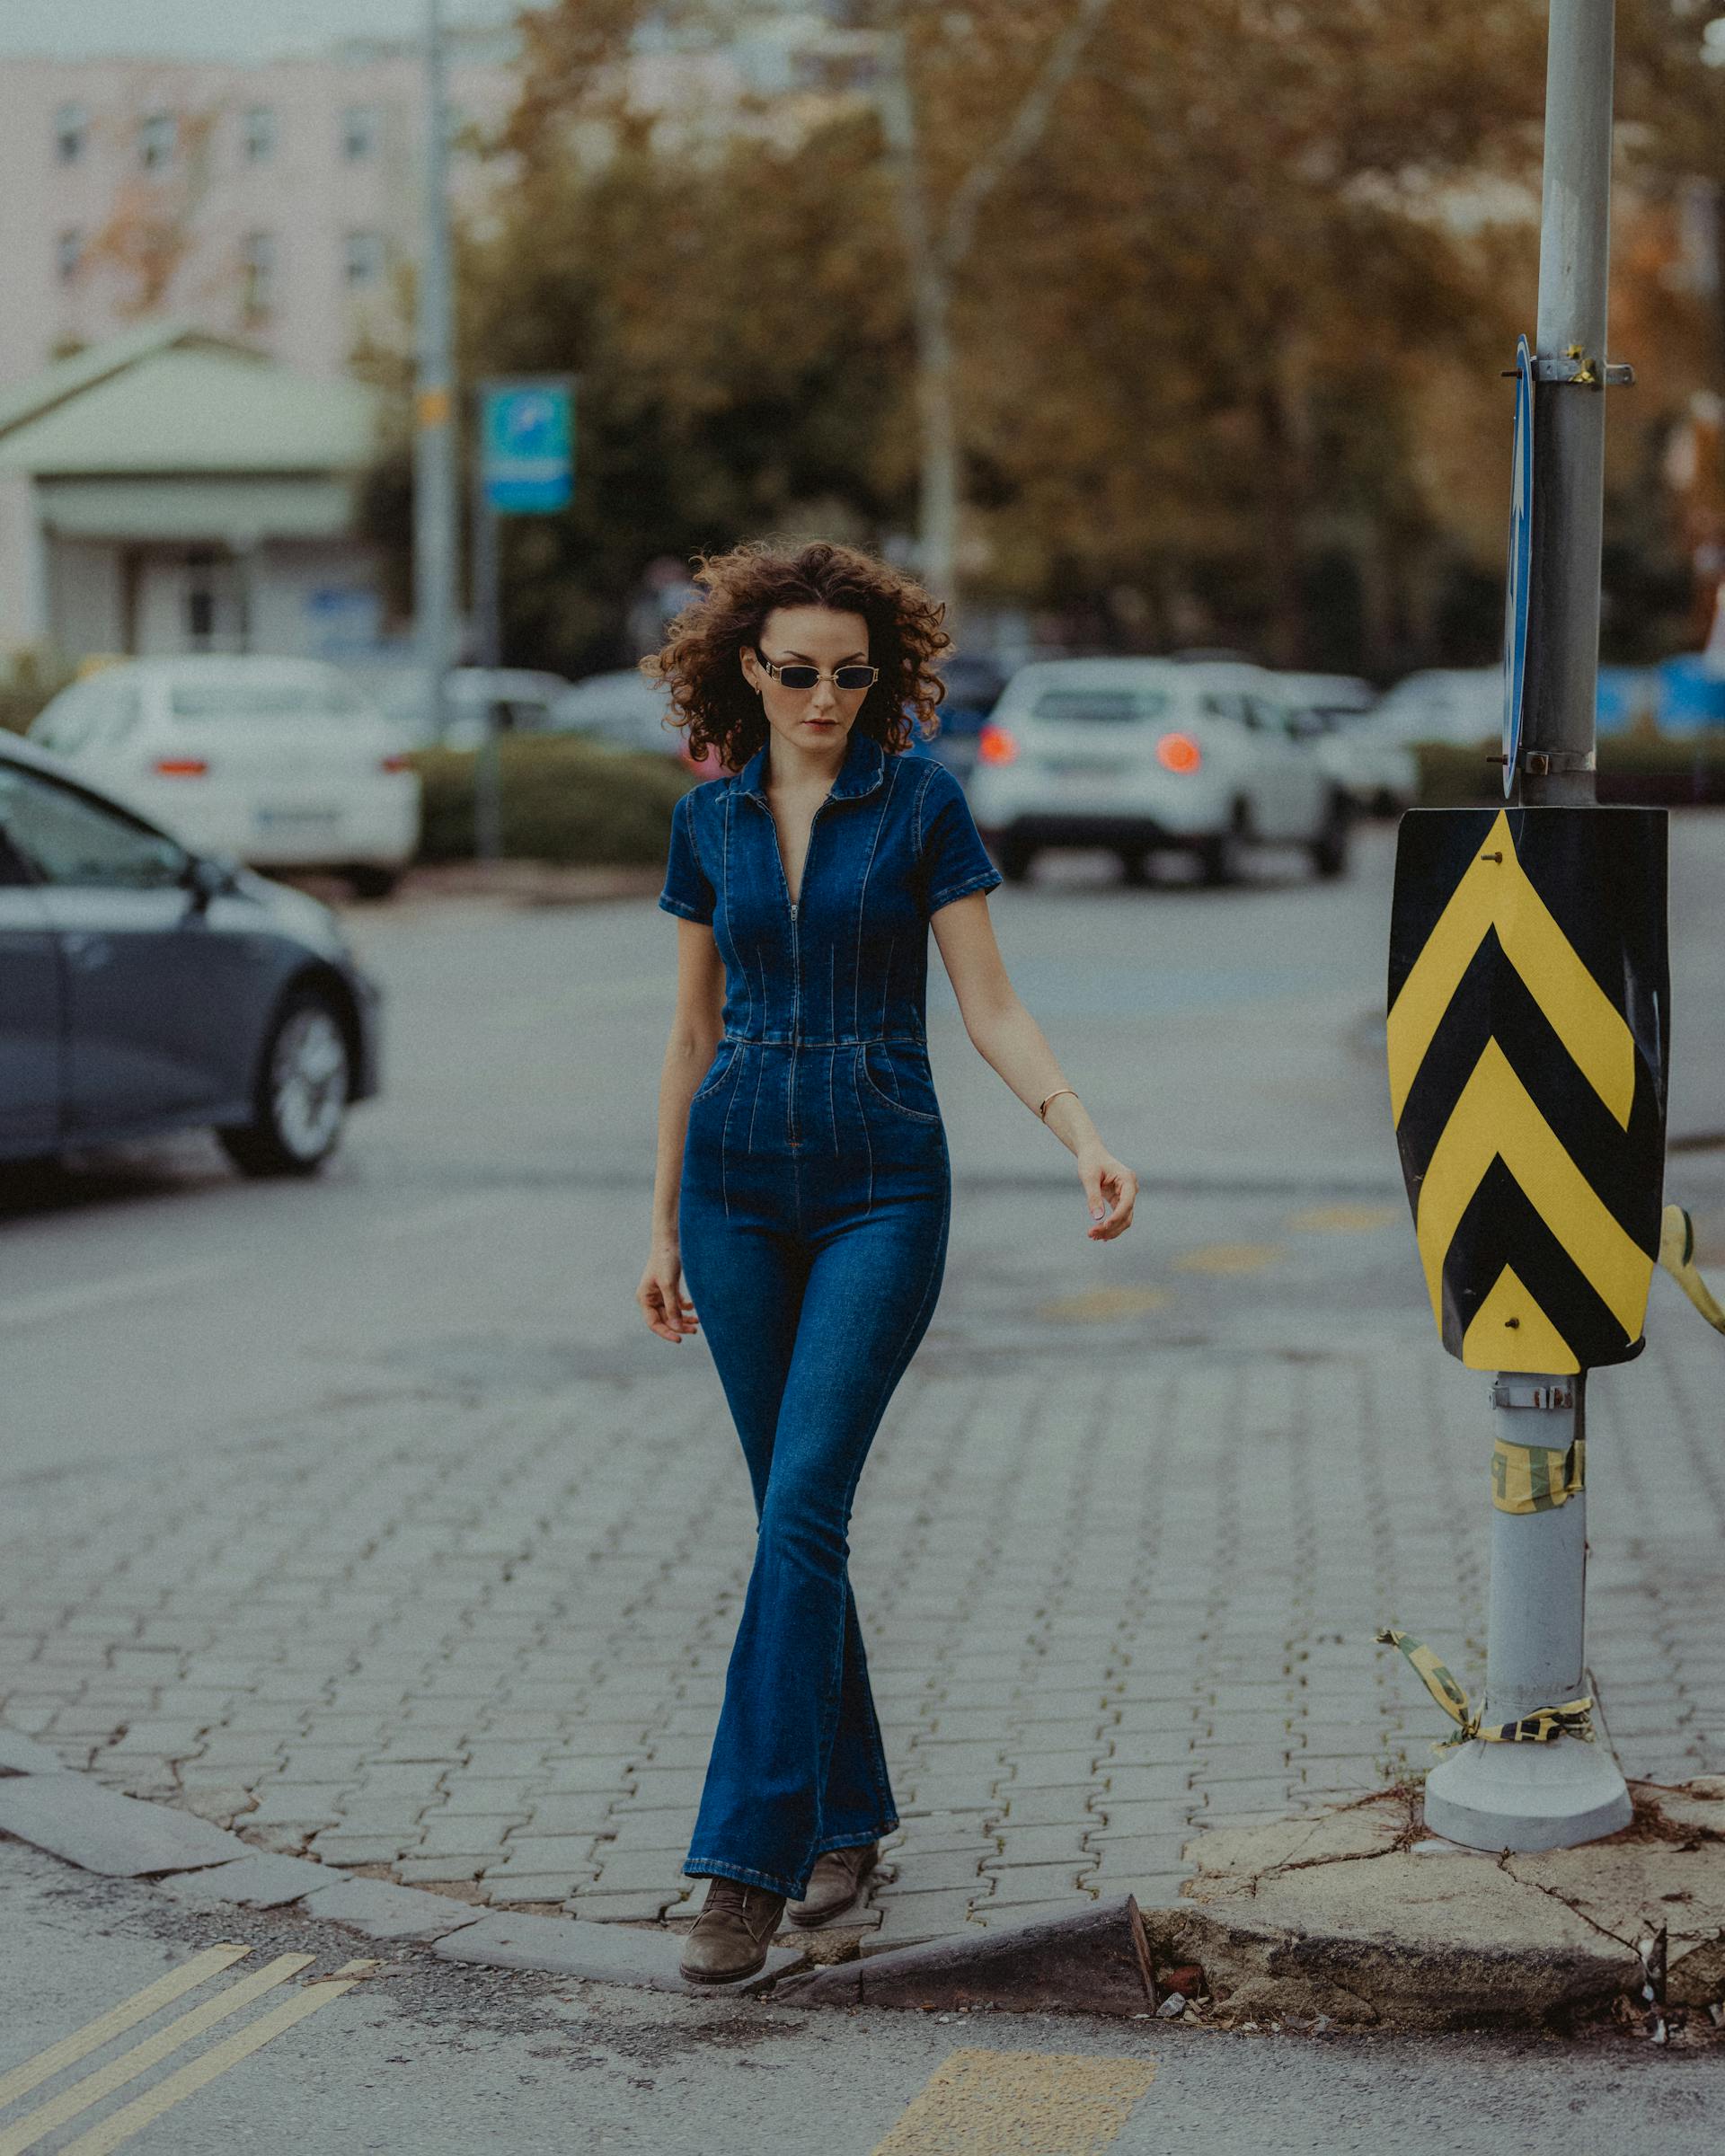 A woman walking down the street | Source: Pexels